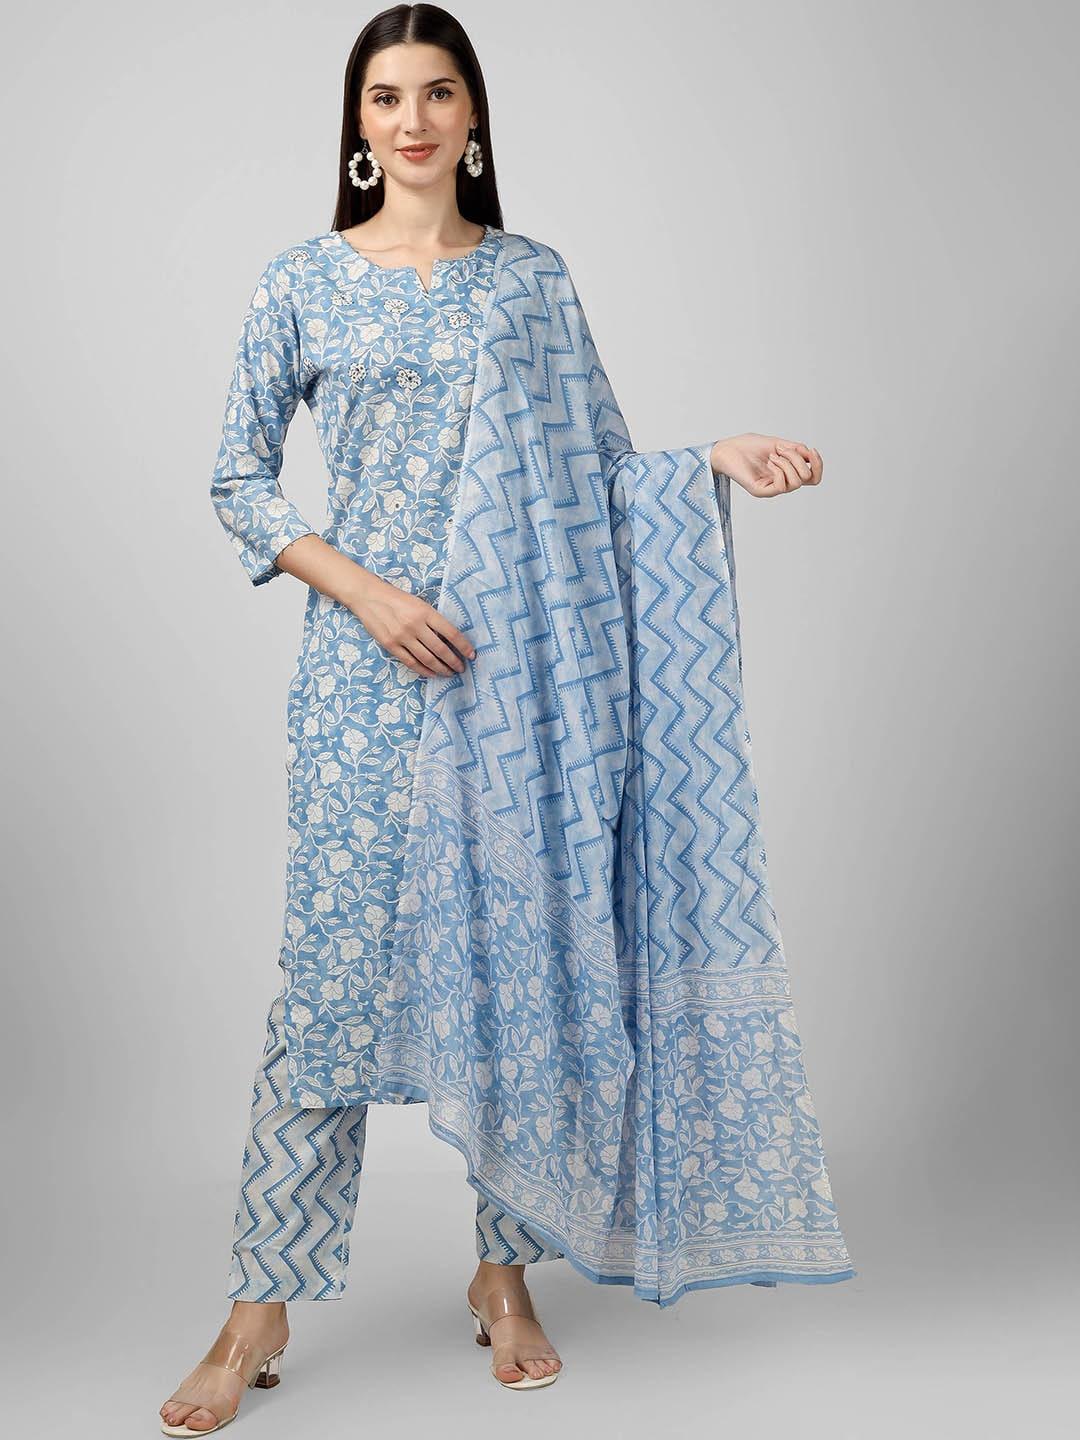 misbis floral printed mirror work pure cotton straight kurta & trouser with dupatta